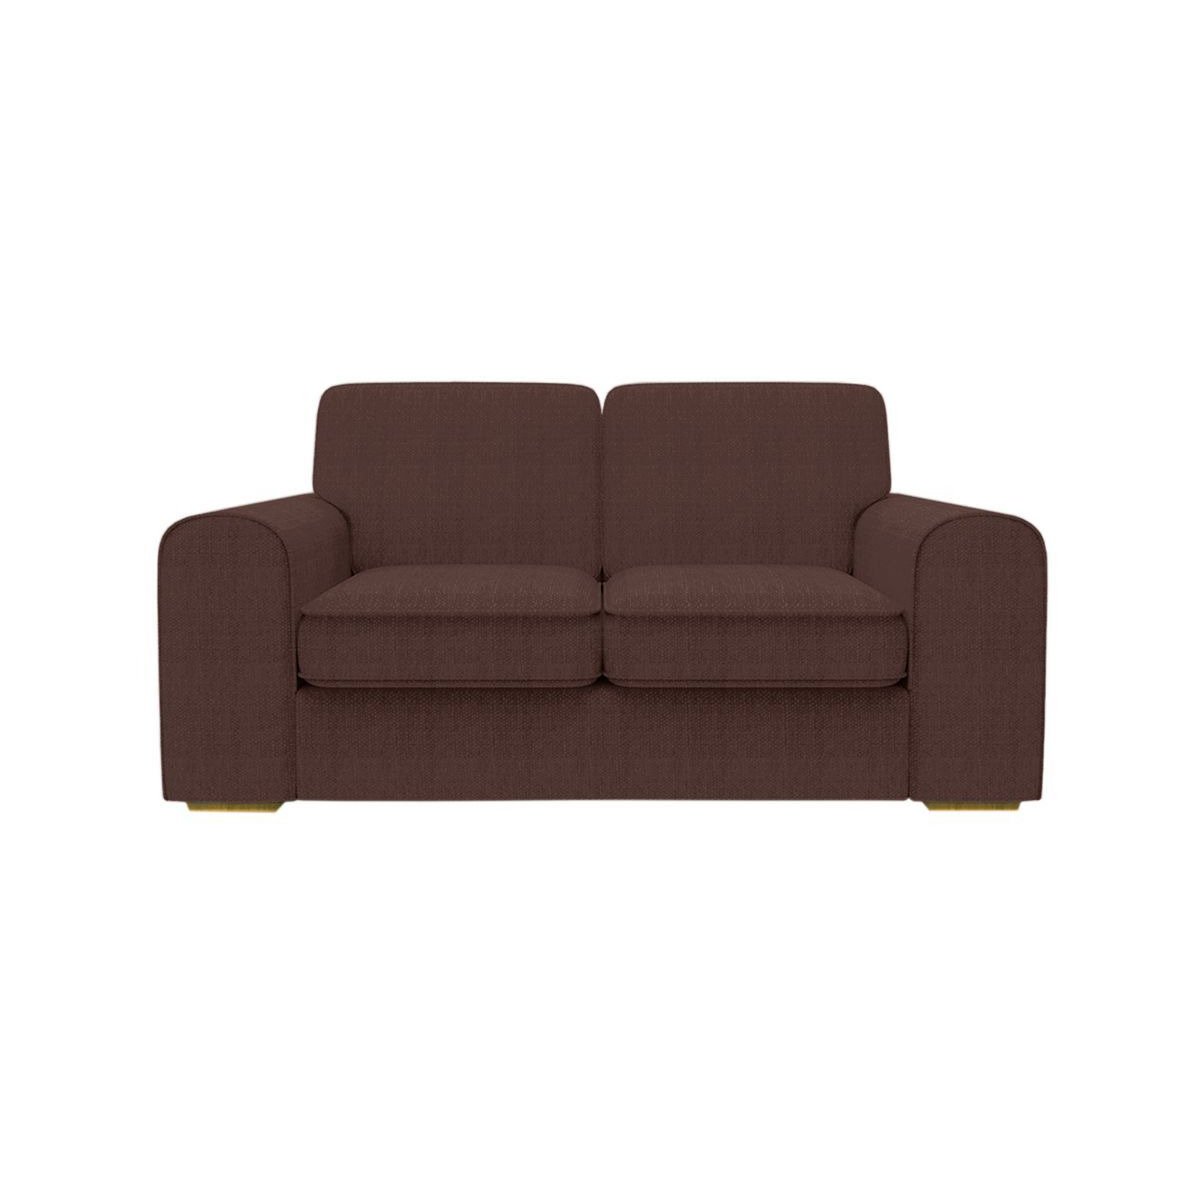 Colista 2 Seater Sofa, burgundy - image 1